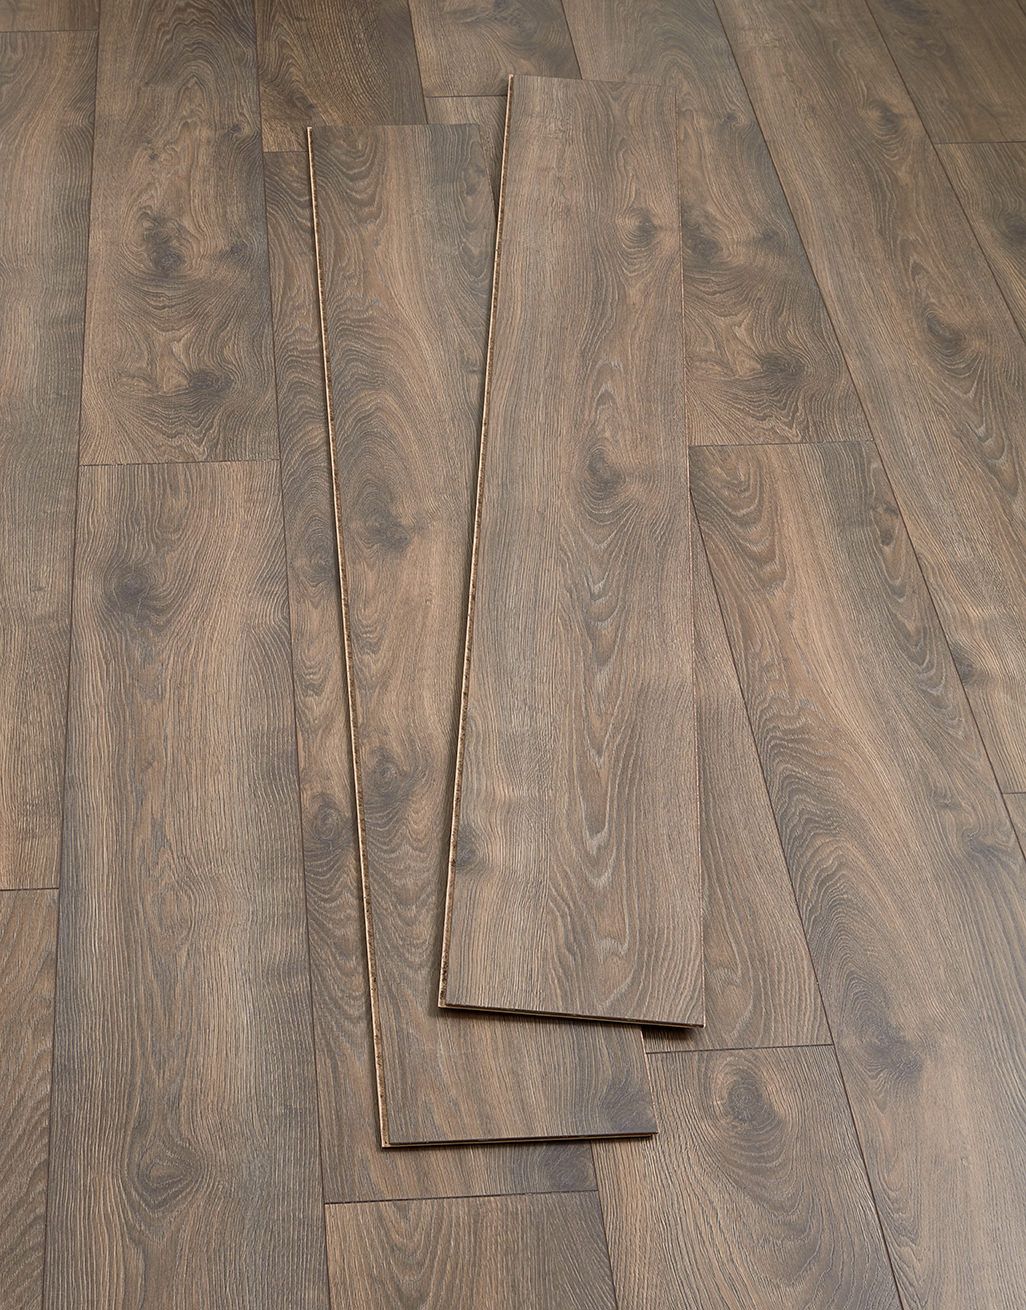 Sienna Long - Umber Oak Laminate Flooring 3